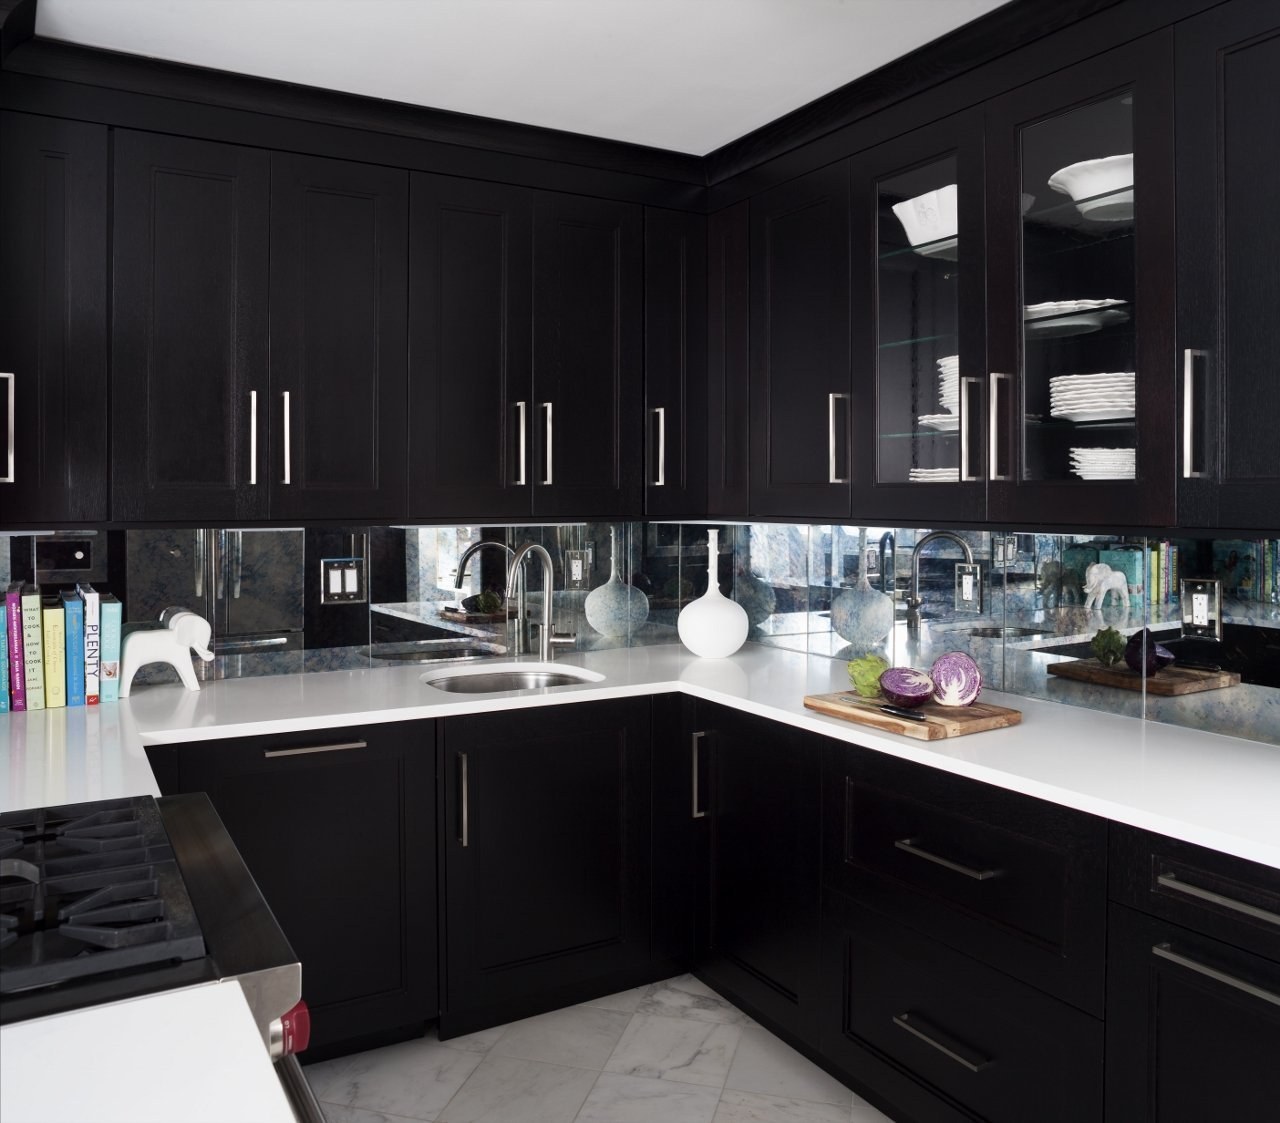 Черная м кухня. Черная глянцевая кухня икеа. Кухня ikea с черным фартуком. Кухня икеа черно белая. Икеа фасад черный глянец.